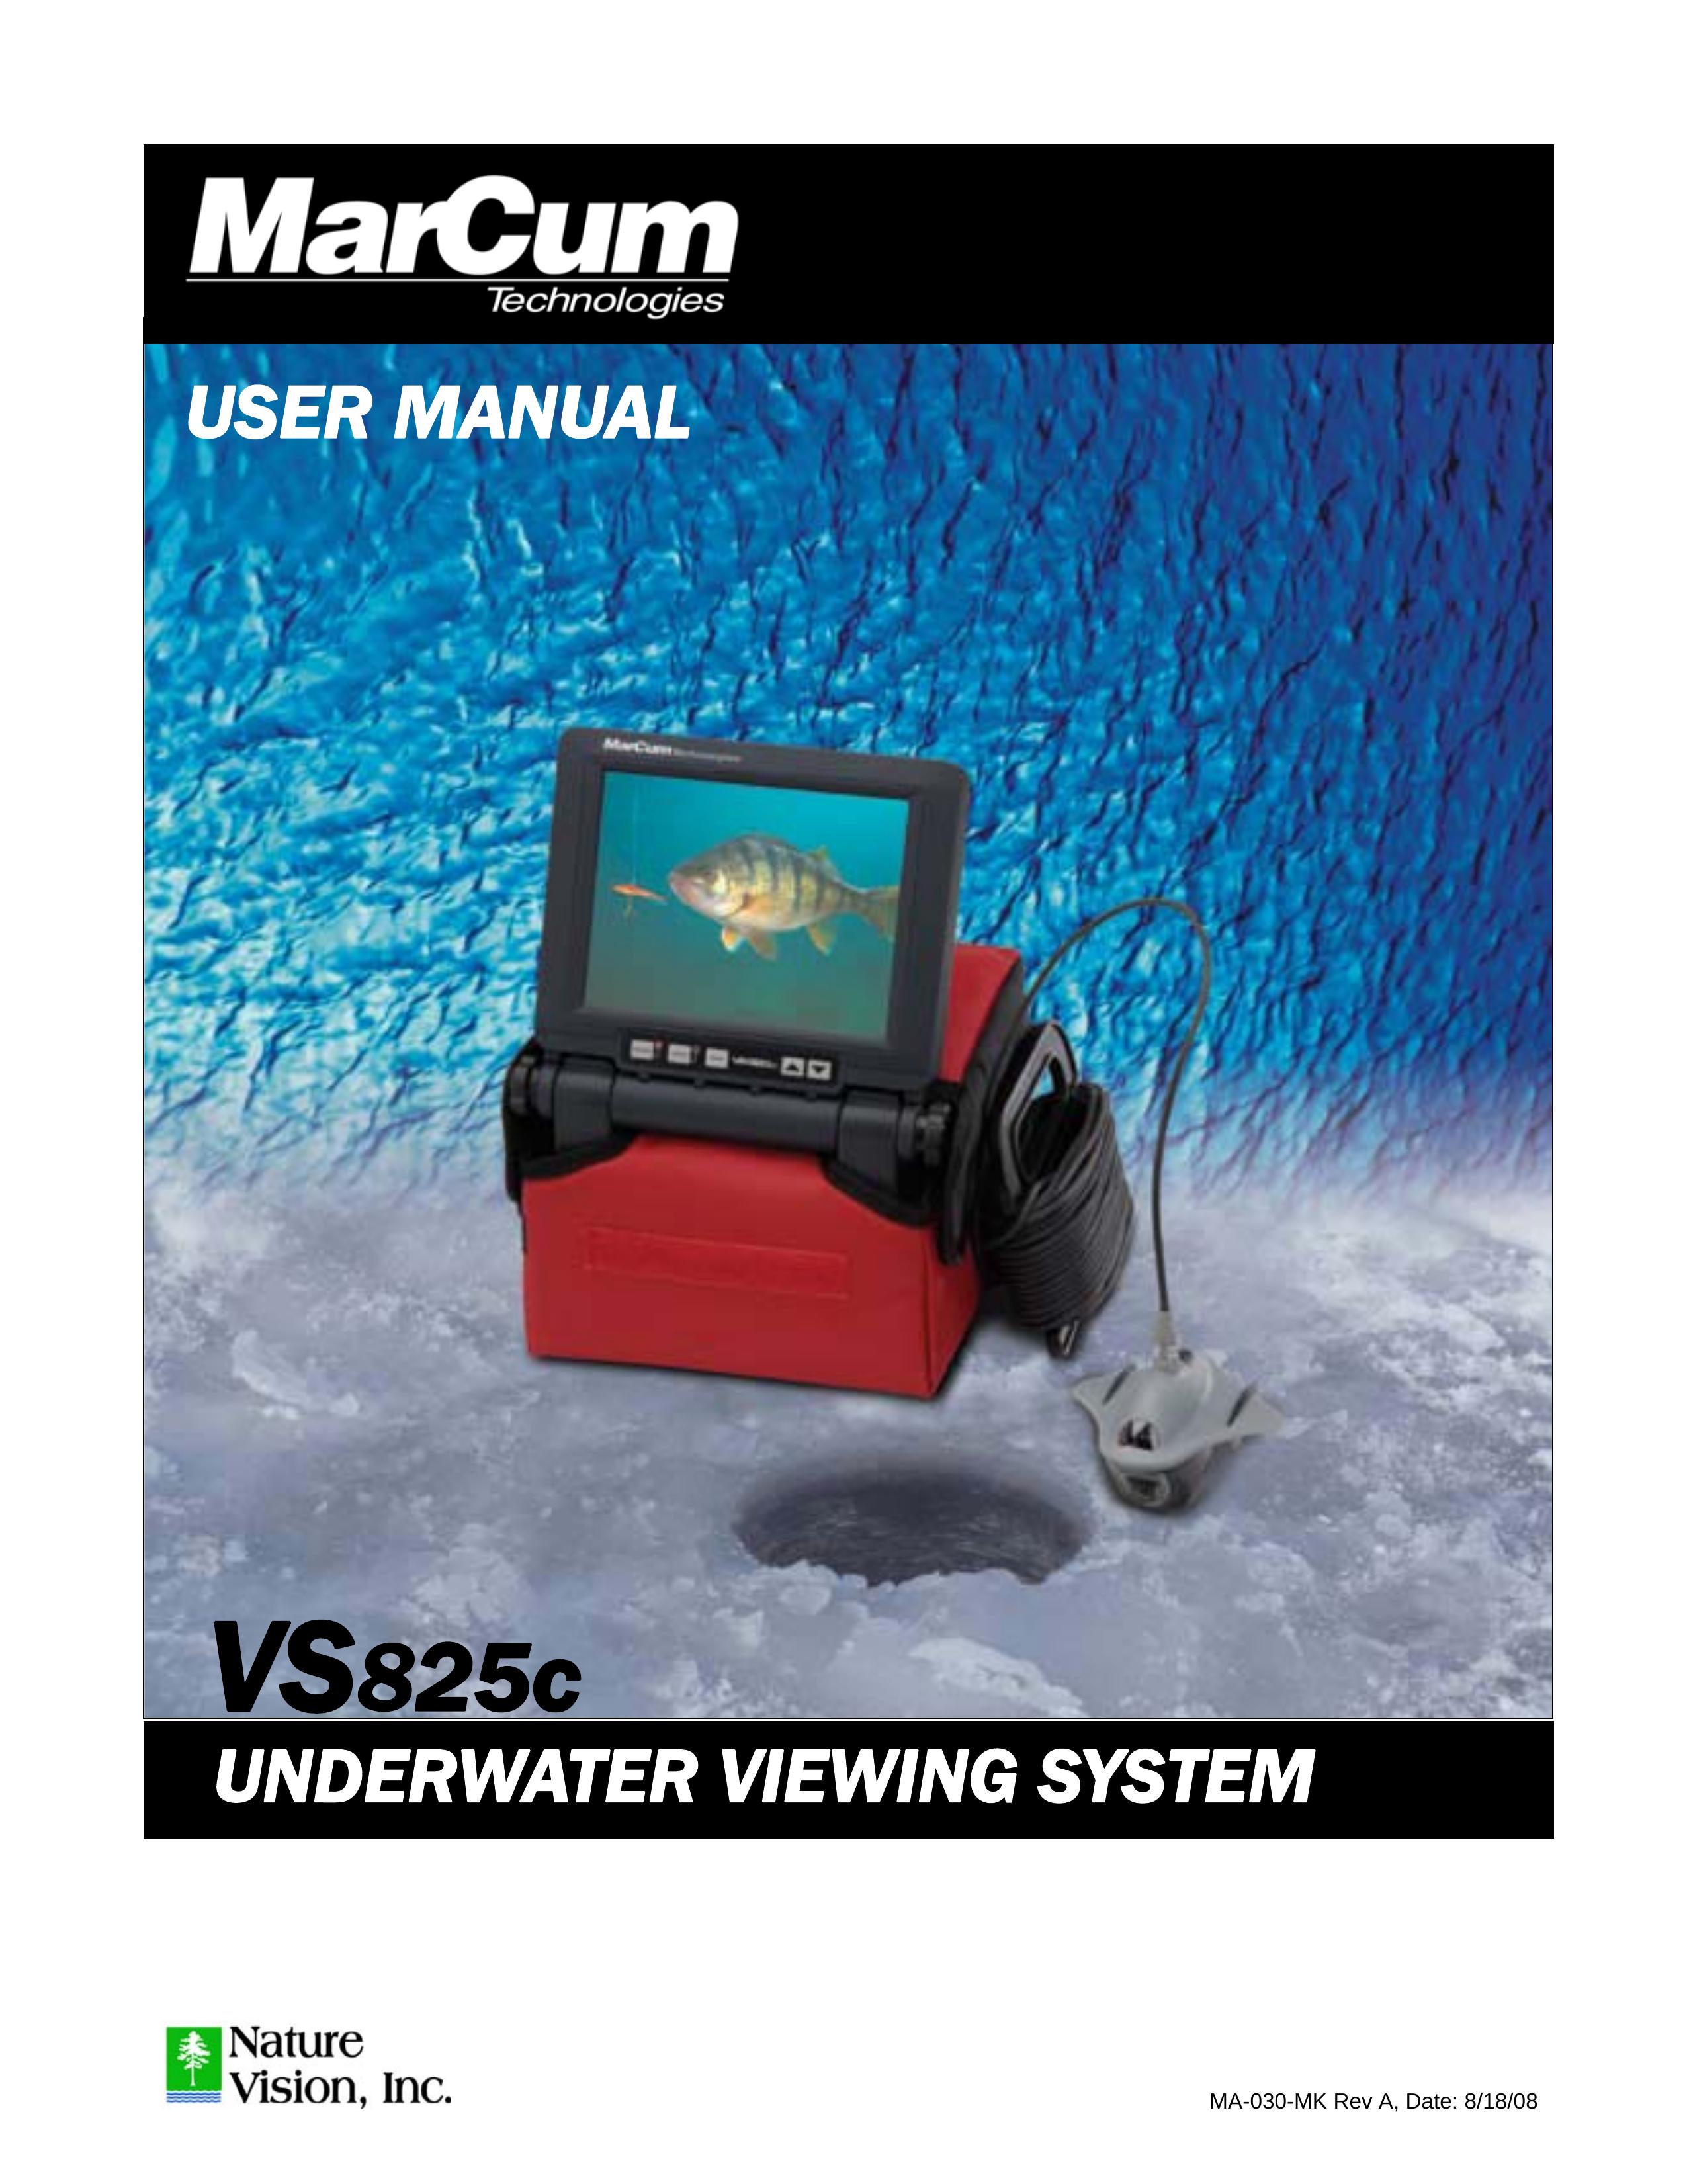 Marcum Technologies VS825 Digital Camera User Manual